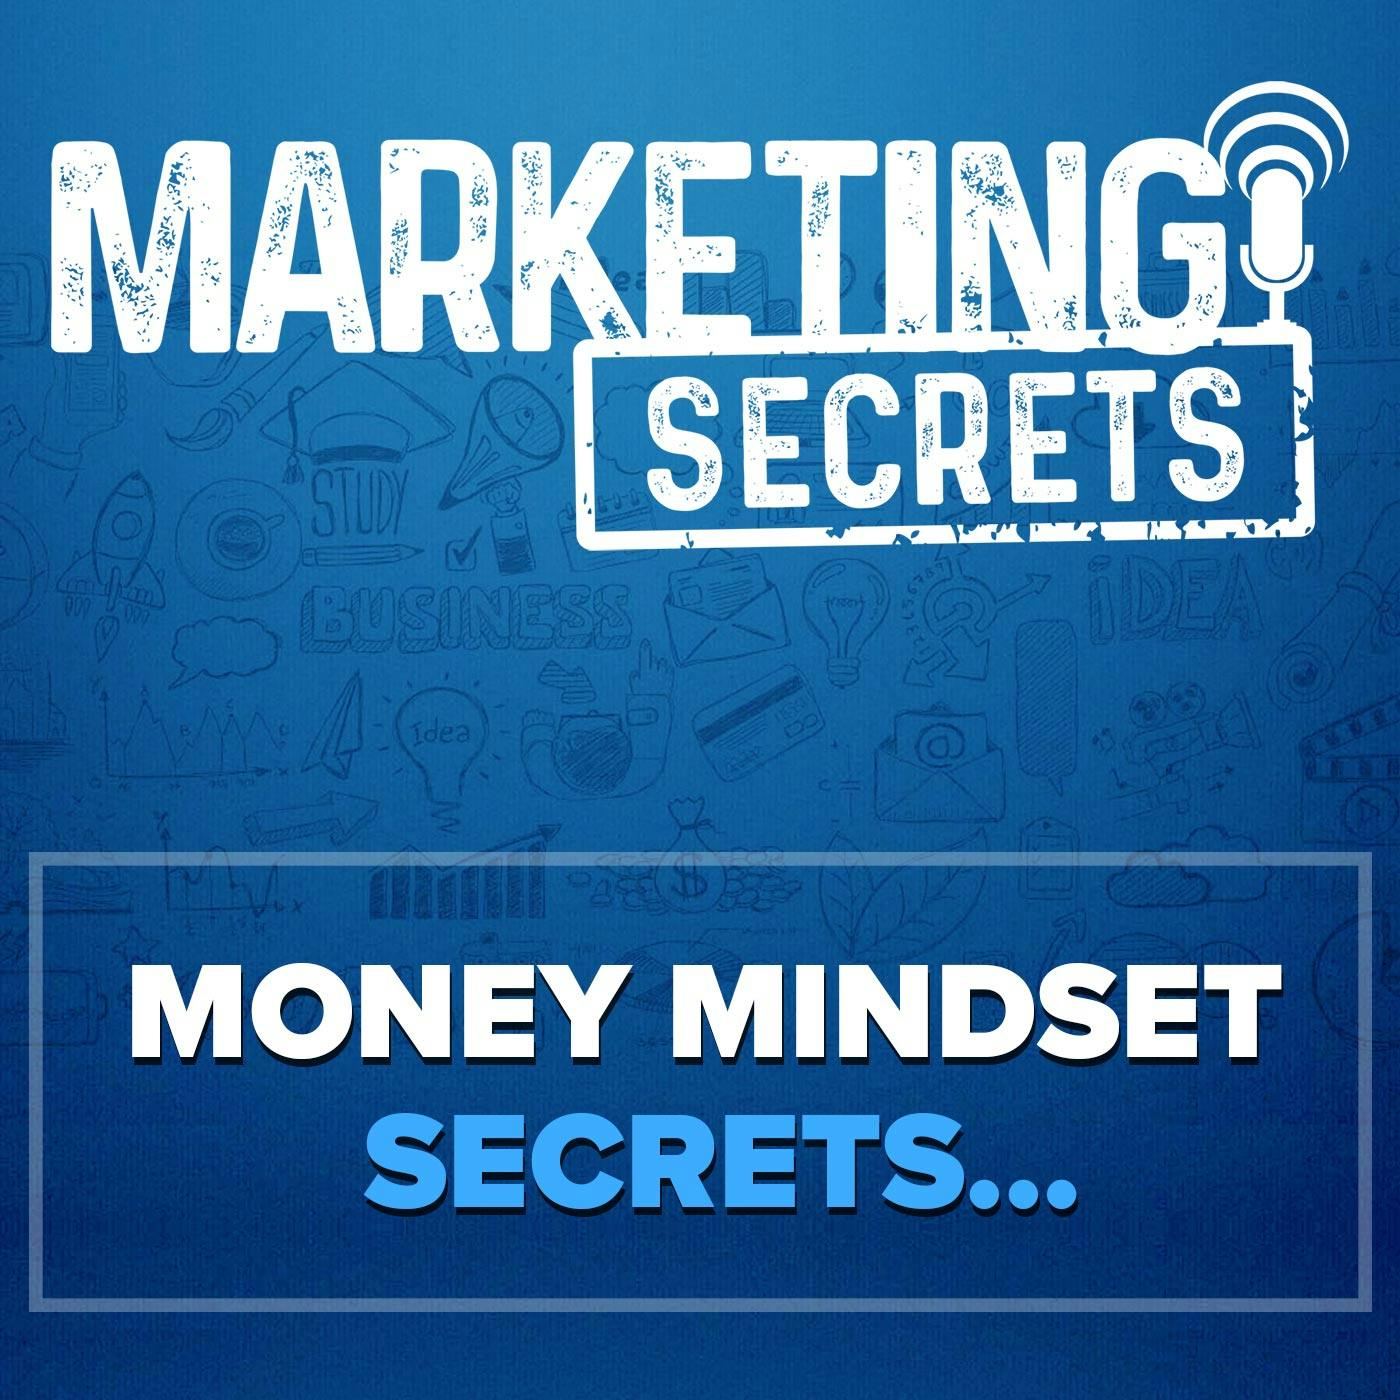 Money Mindset Secrets…